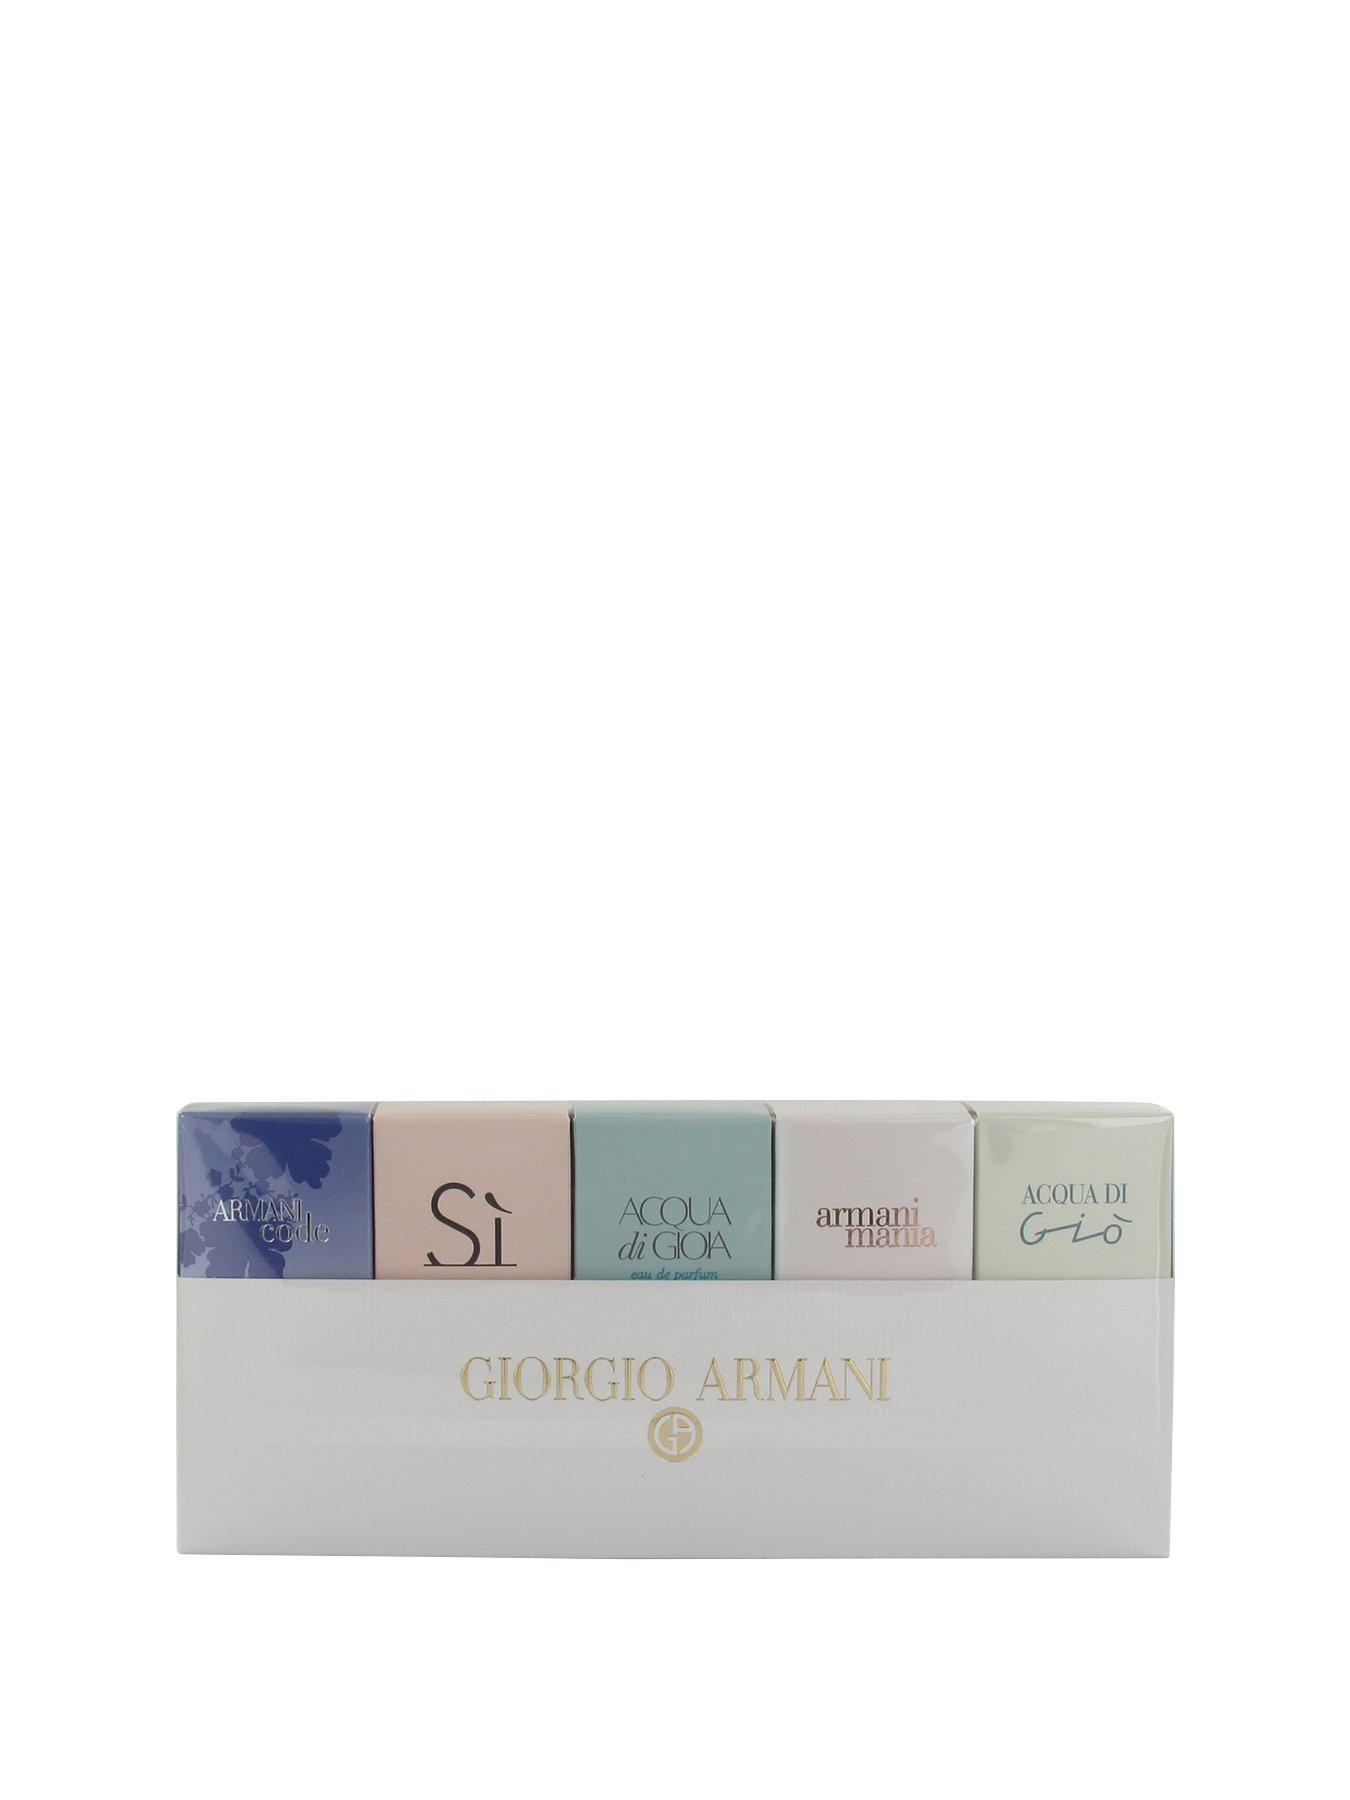 armani mini perfume gift set